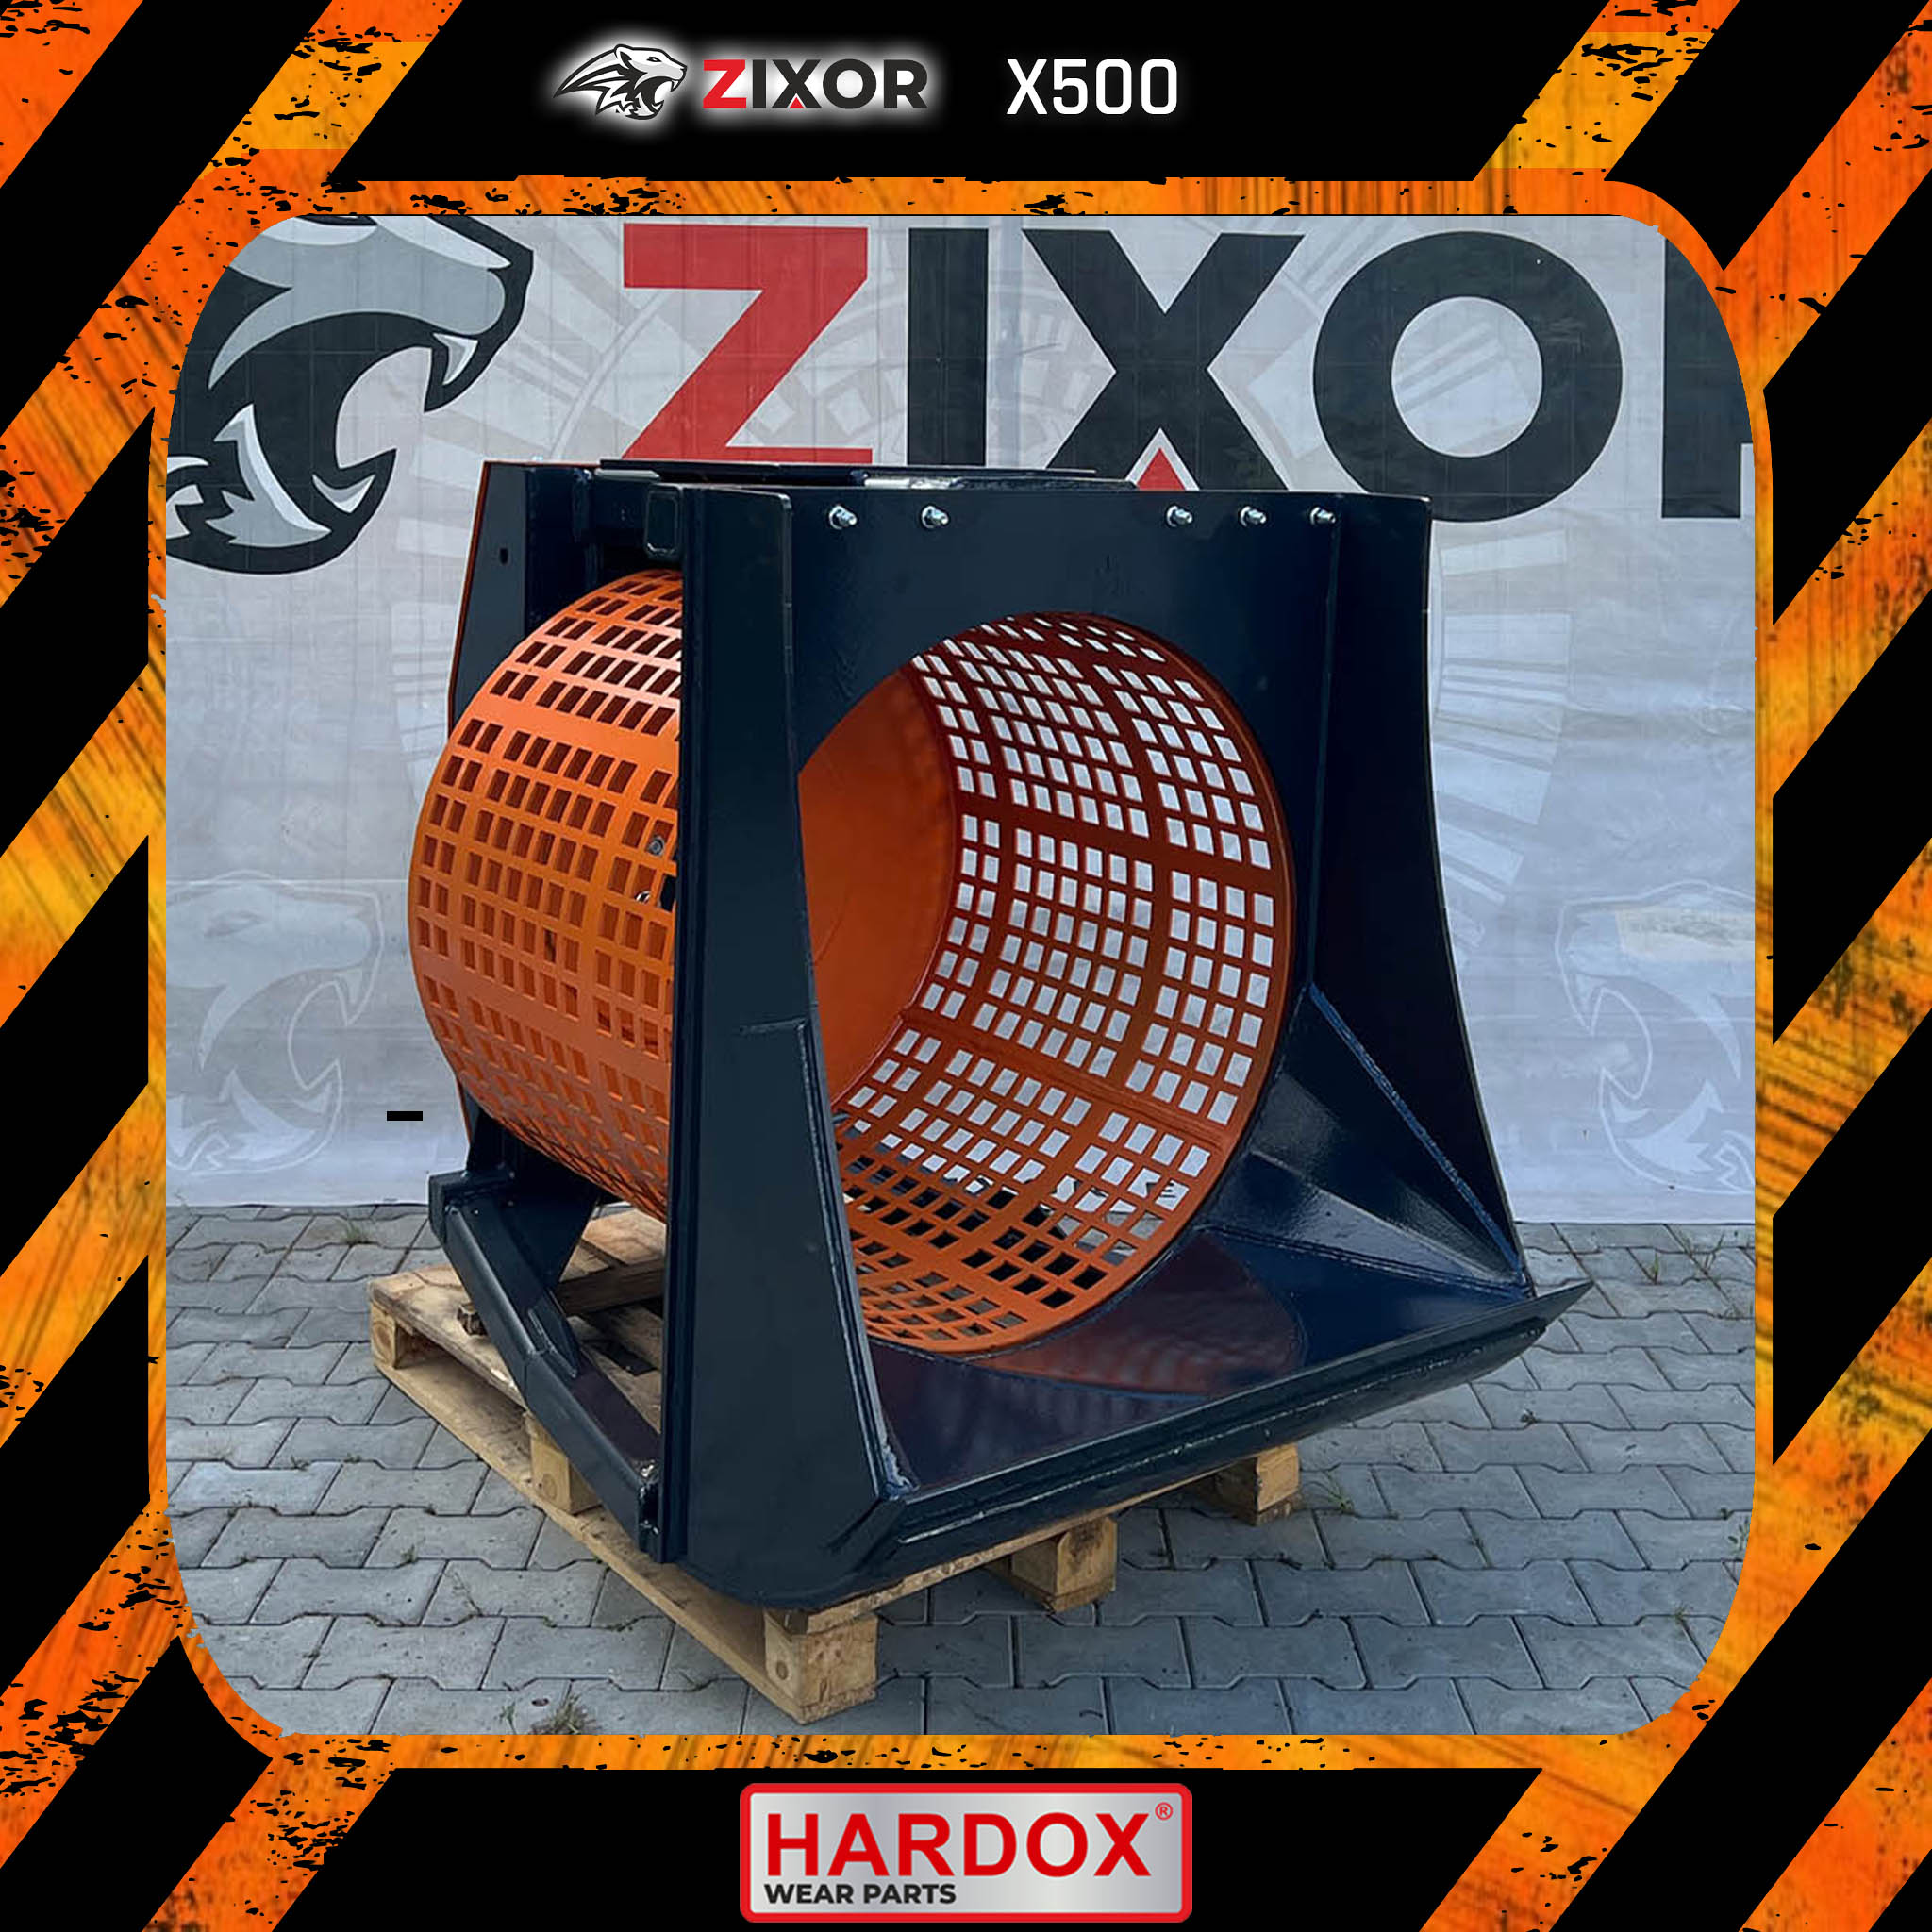 Model Zixor X500